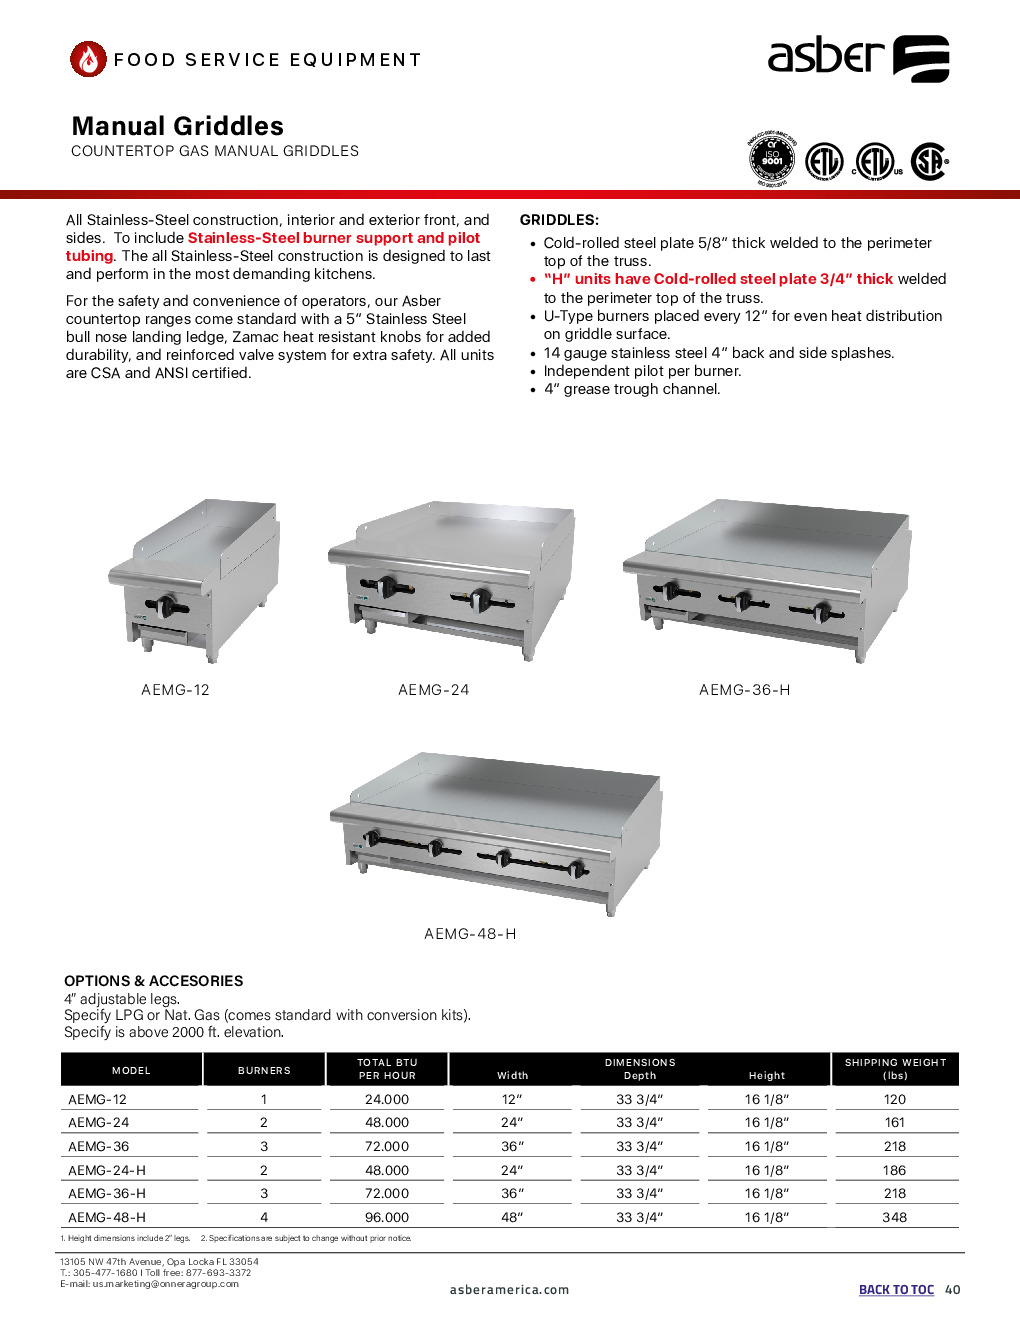 Asber AEMG-24 Countertop Gas Manual Griddle, 2 x 24,000 BTU - 24